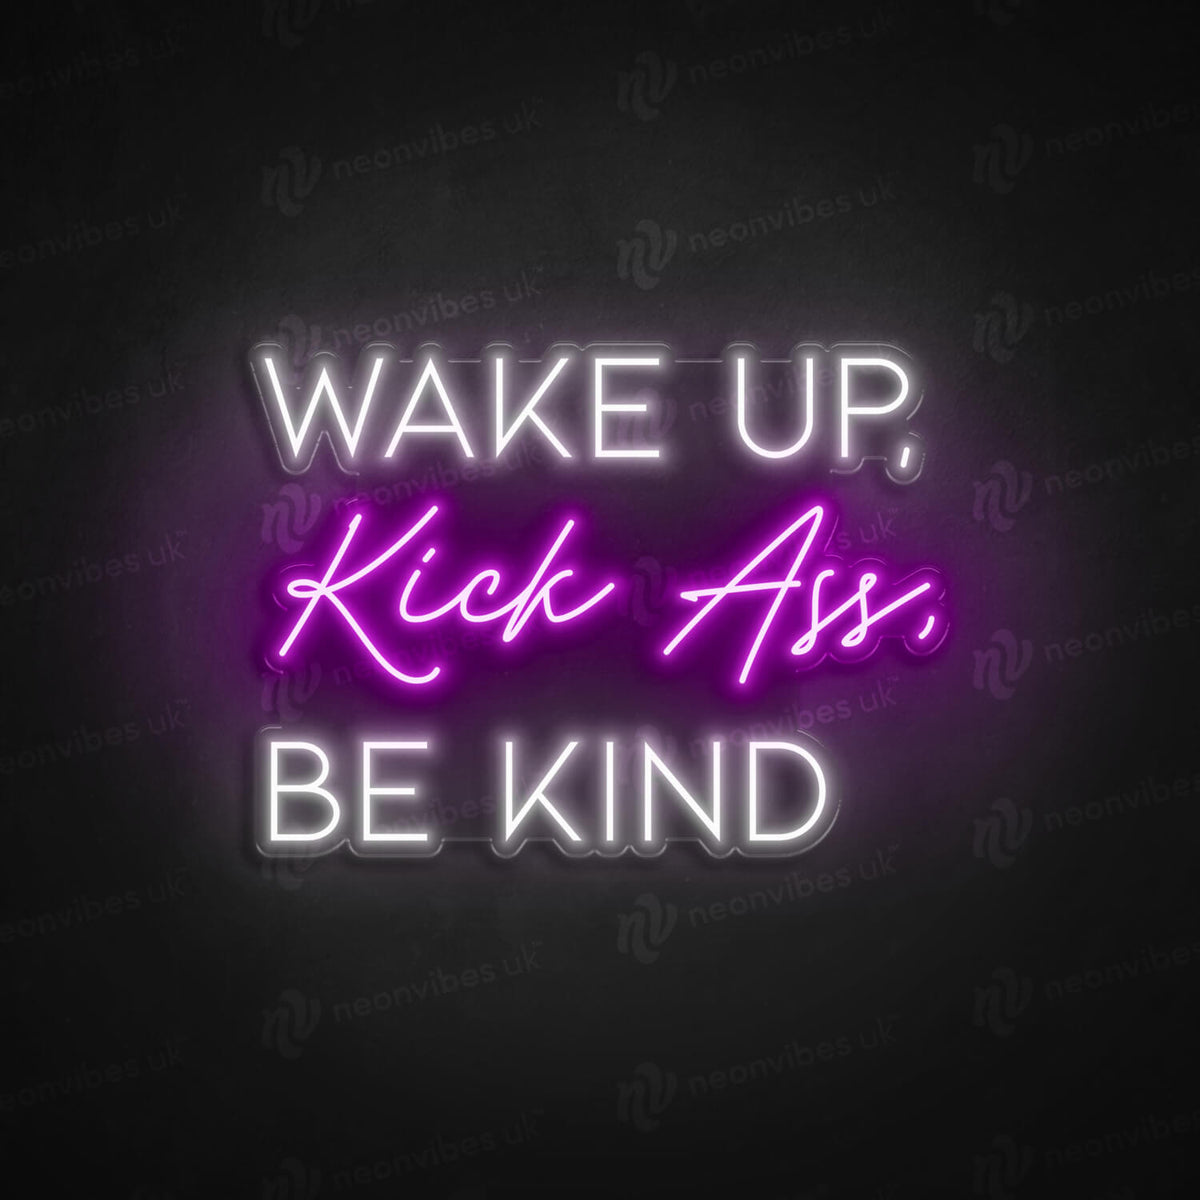 Wake up kick ass be kind neon sign